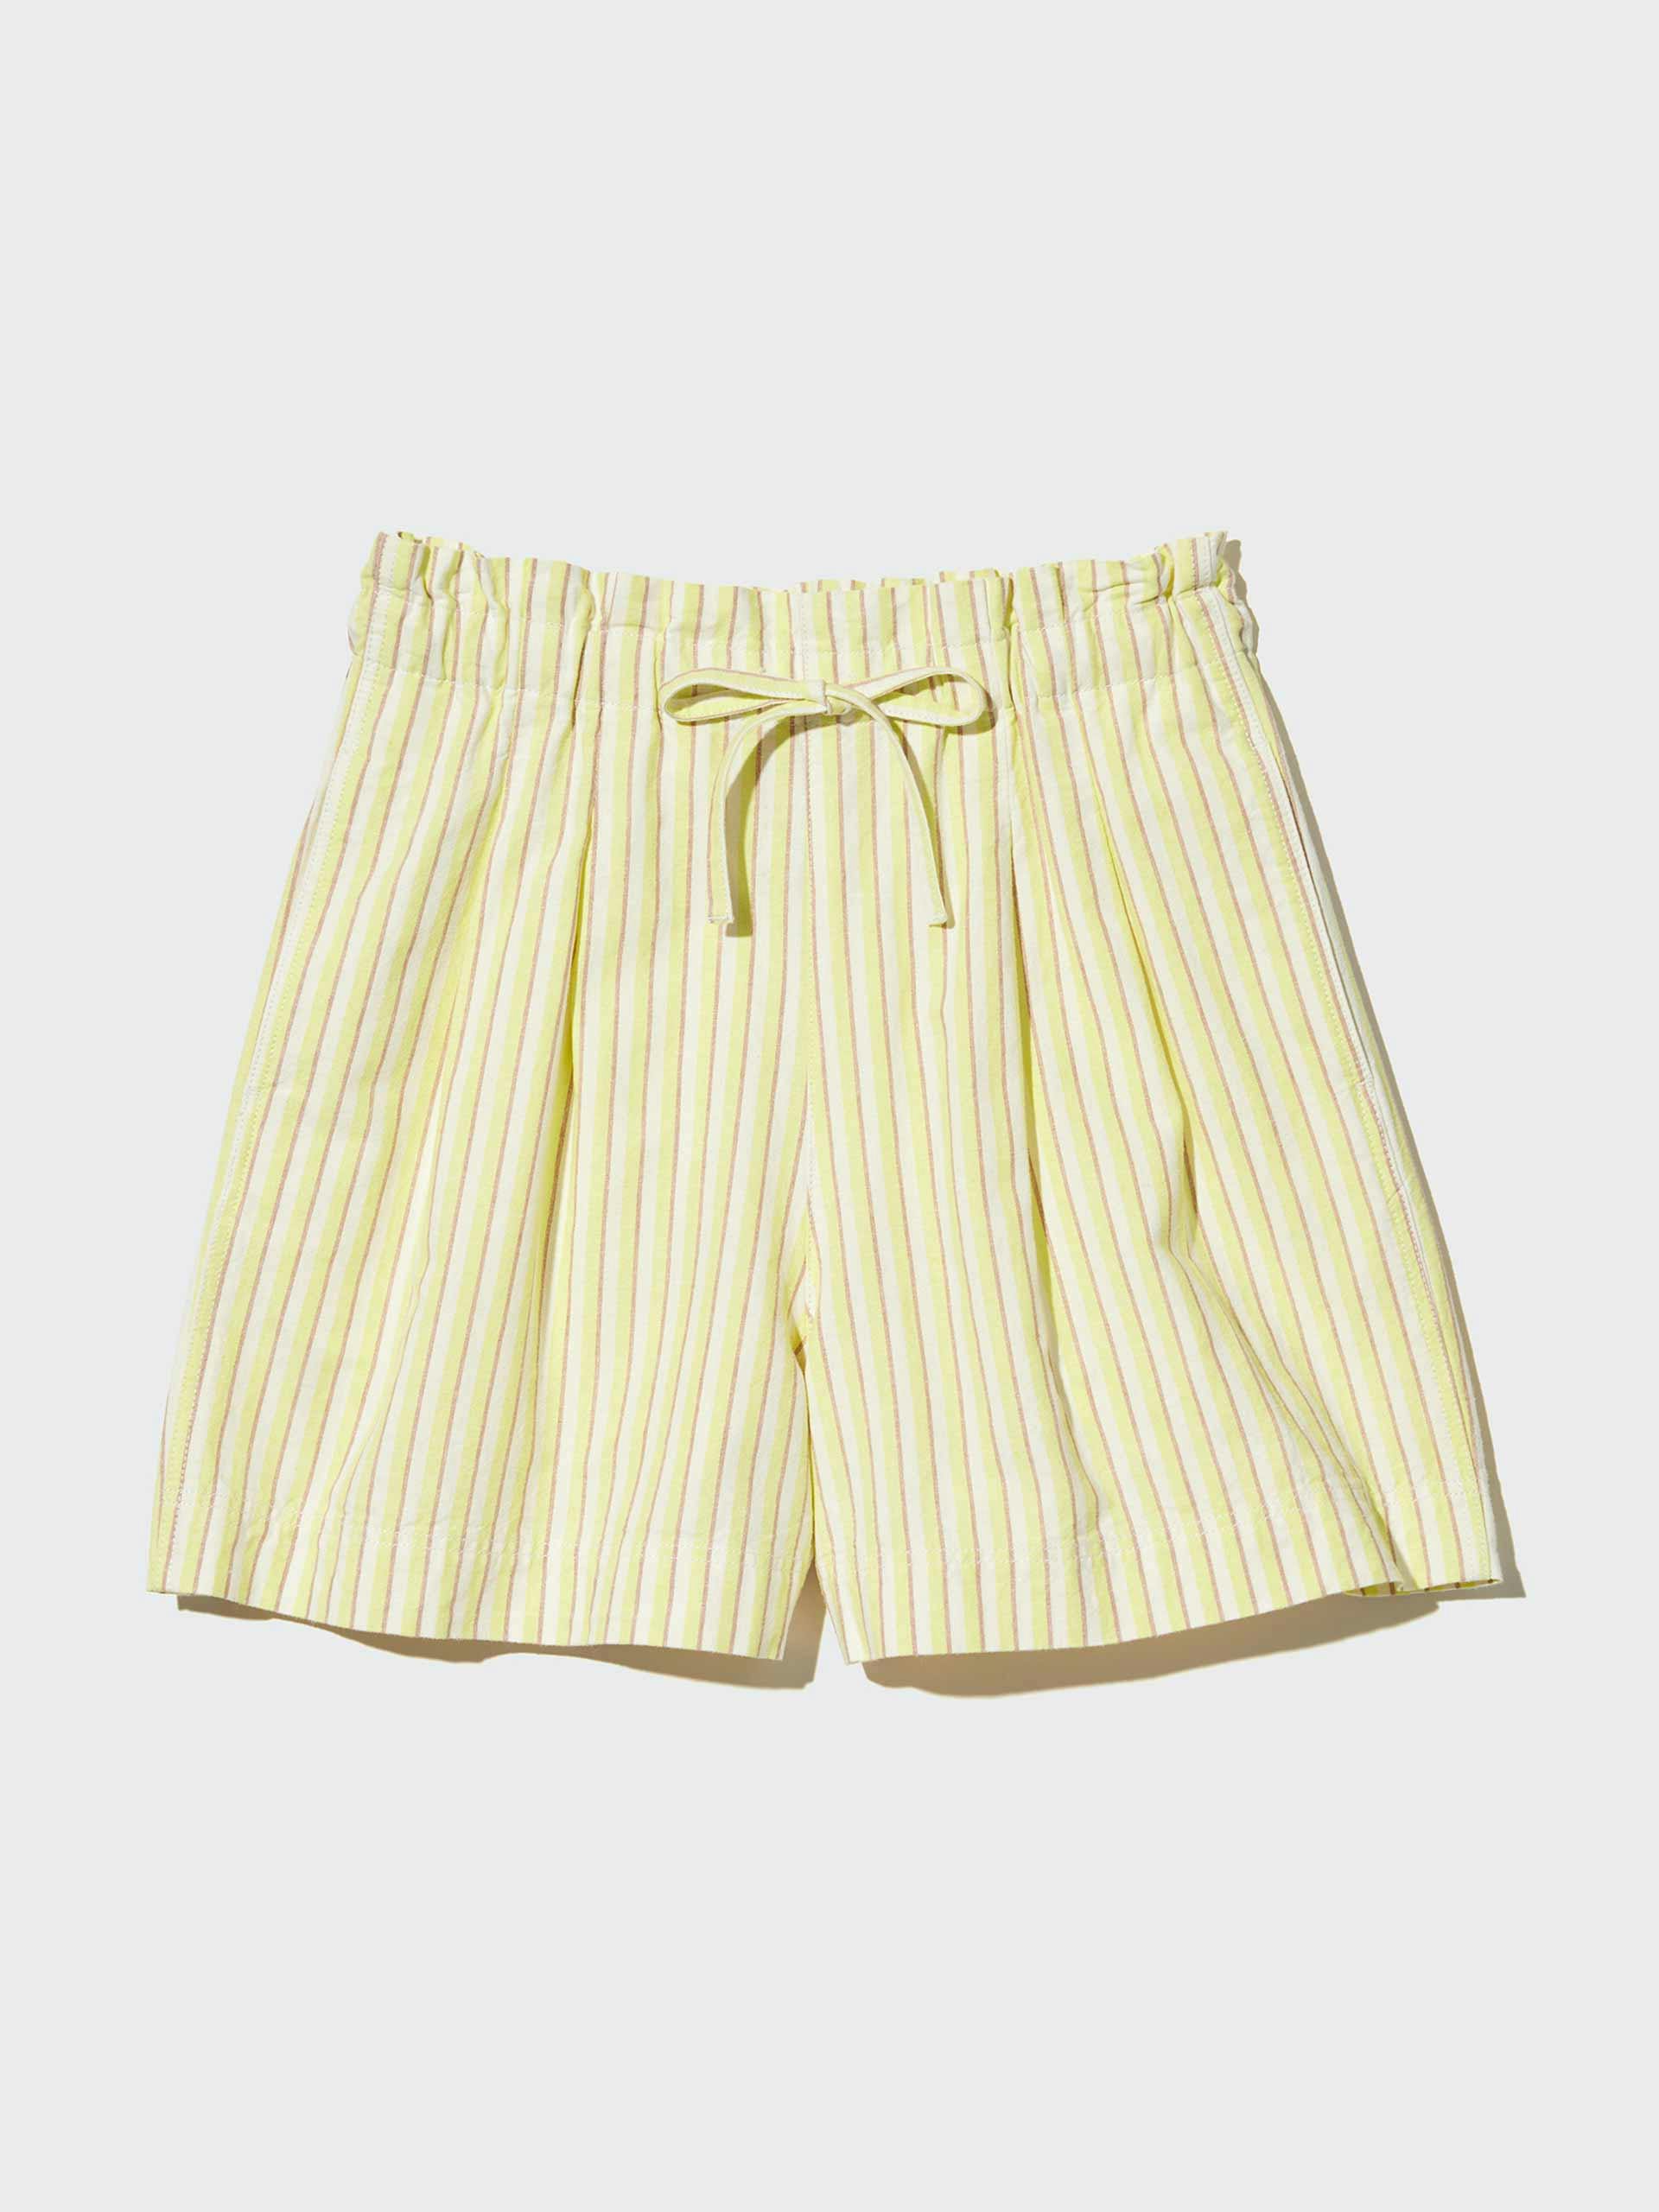 Yellow striped shorts